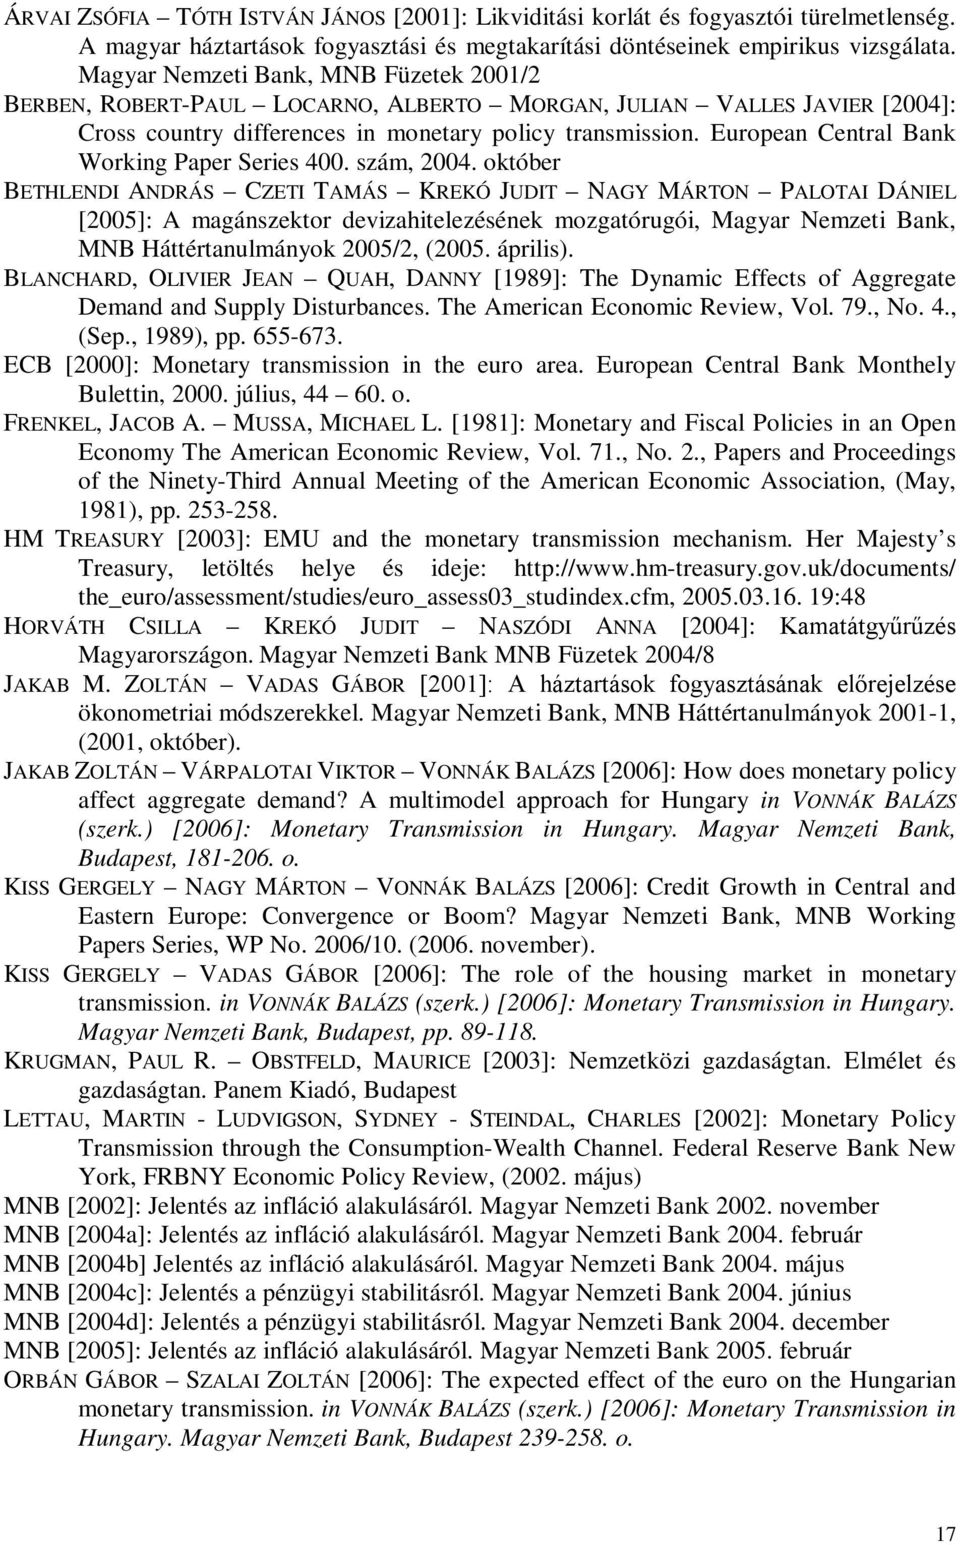 European Cenral Bank Working Paper Series 400. szám, 2004.